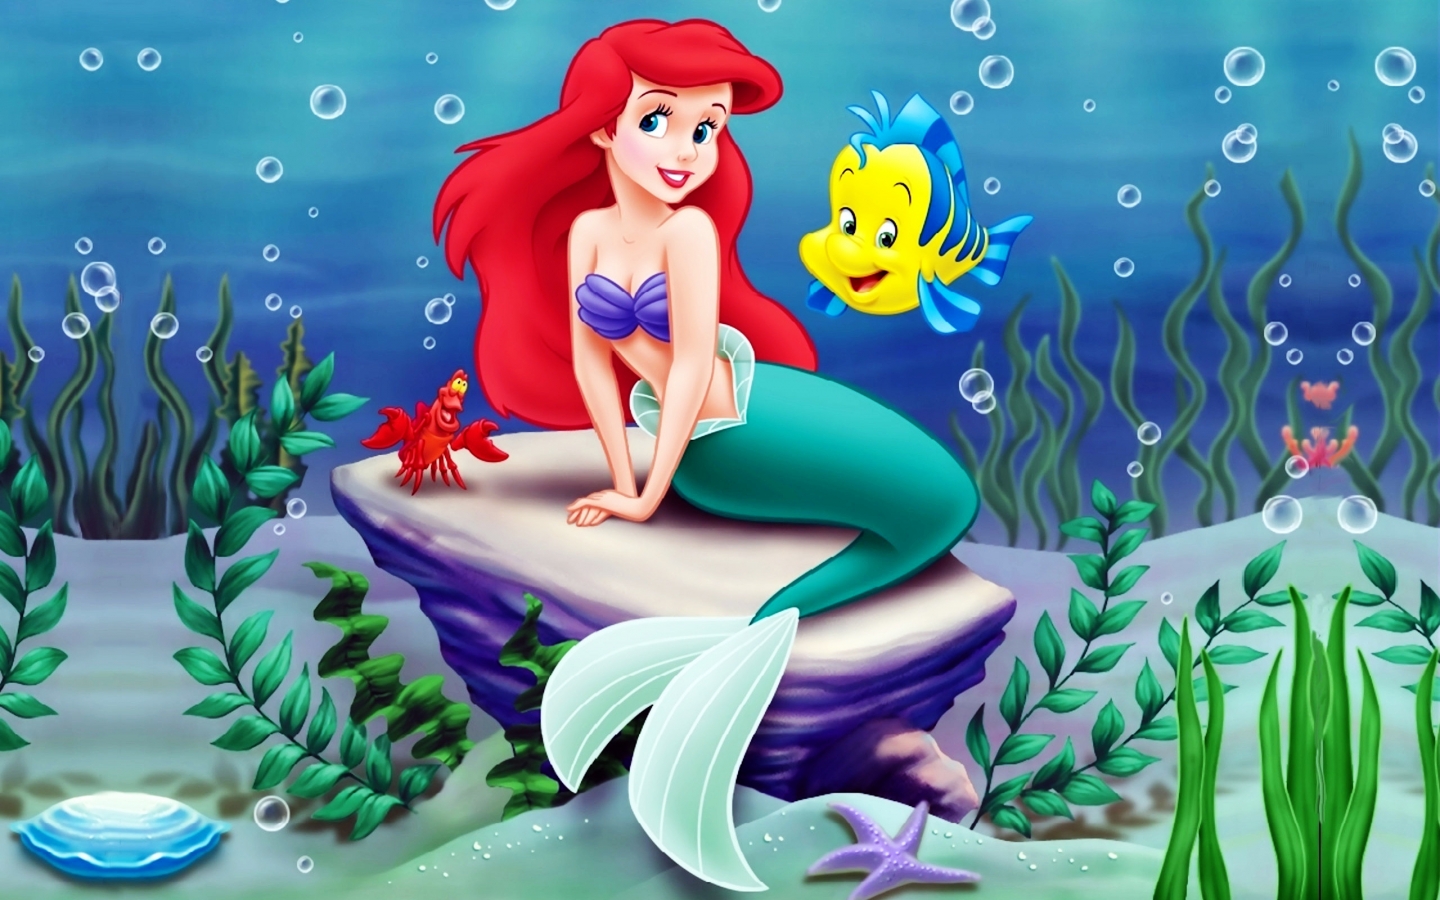 Little Mermaid Ariel for 1440 x 900 widescreen resolution